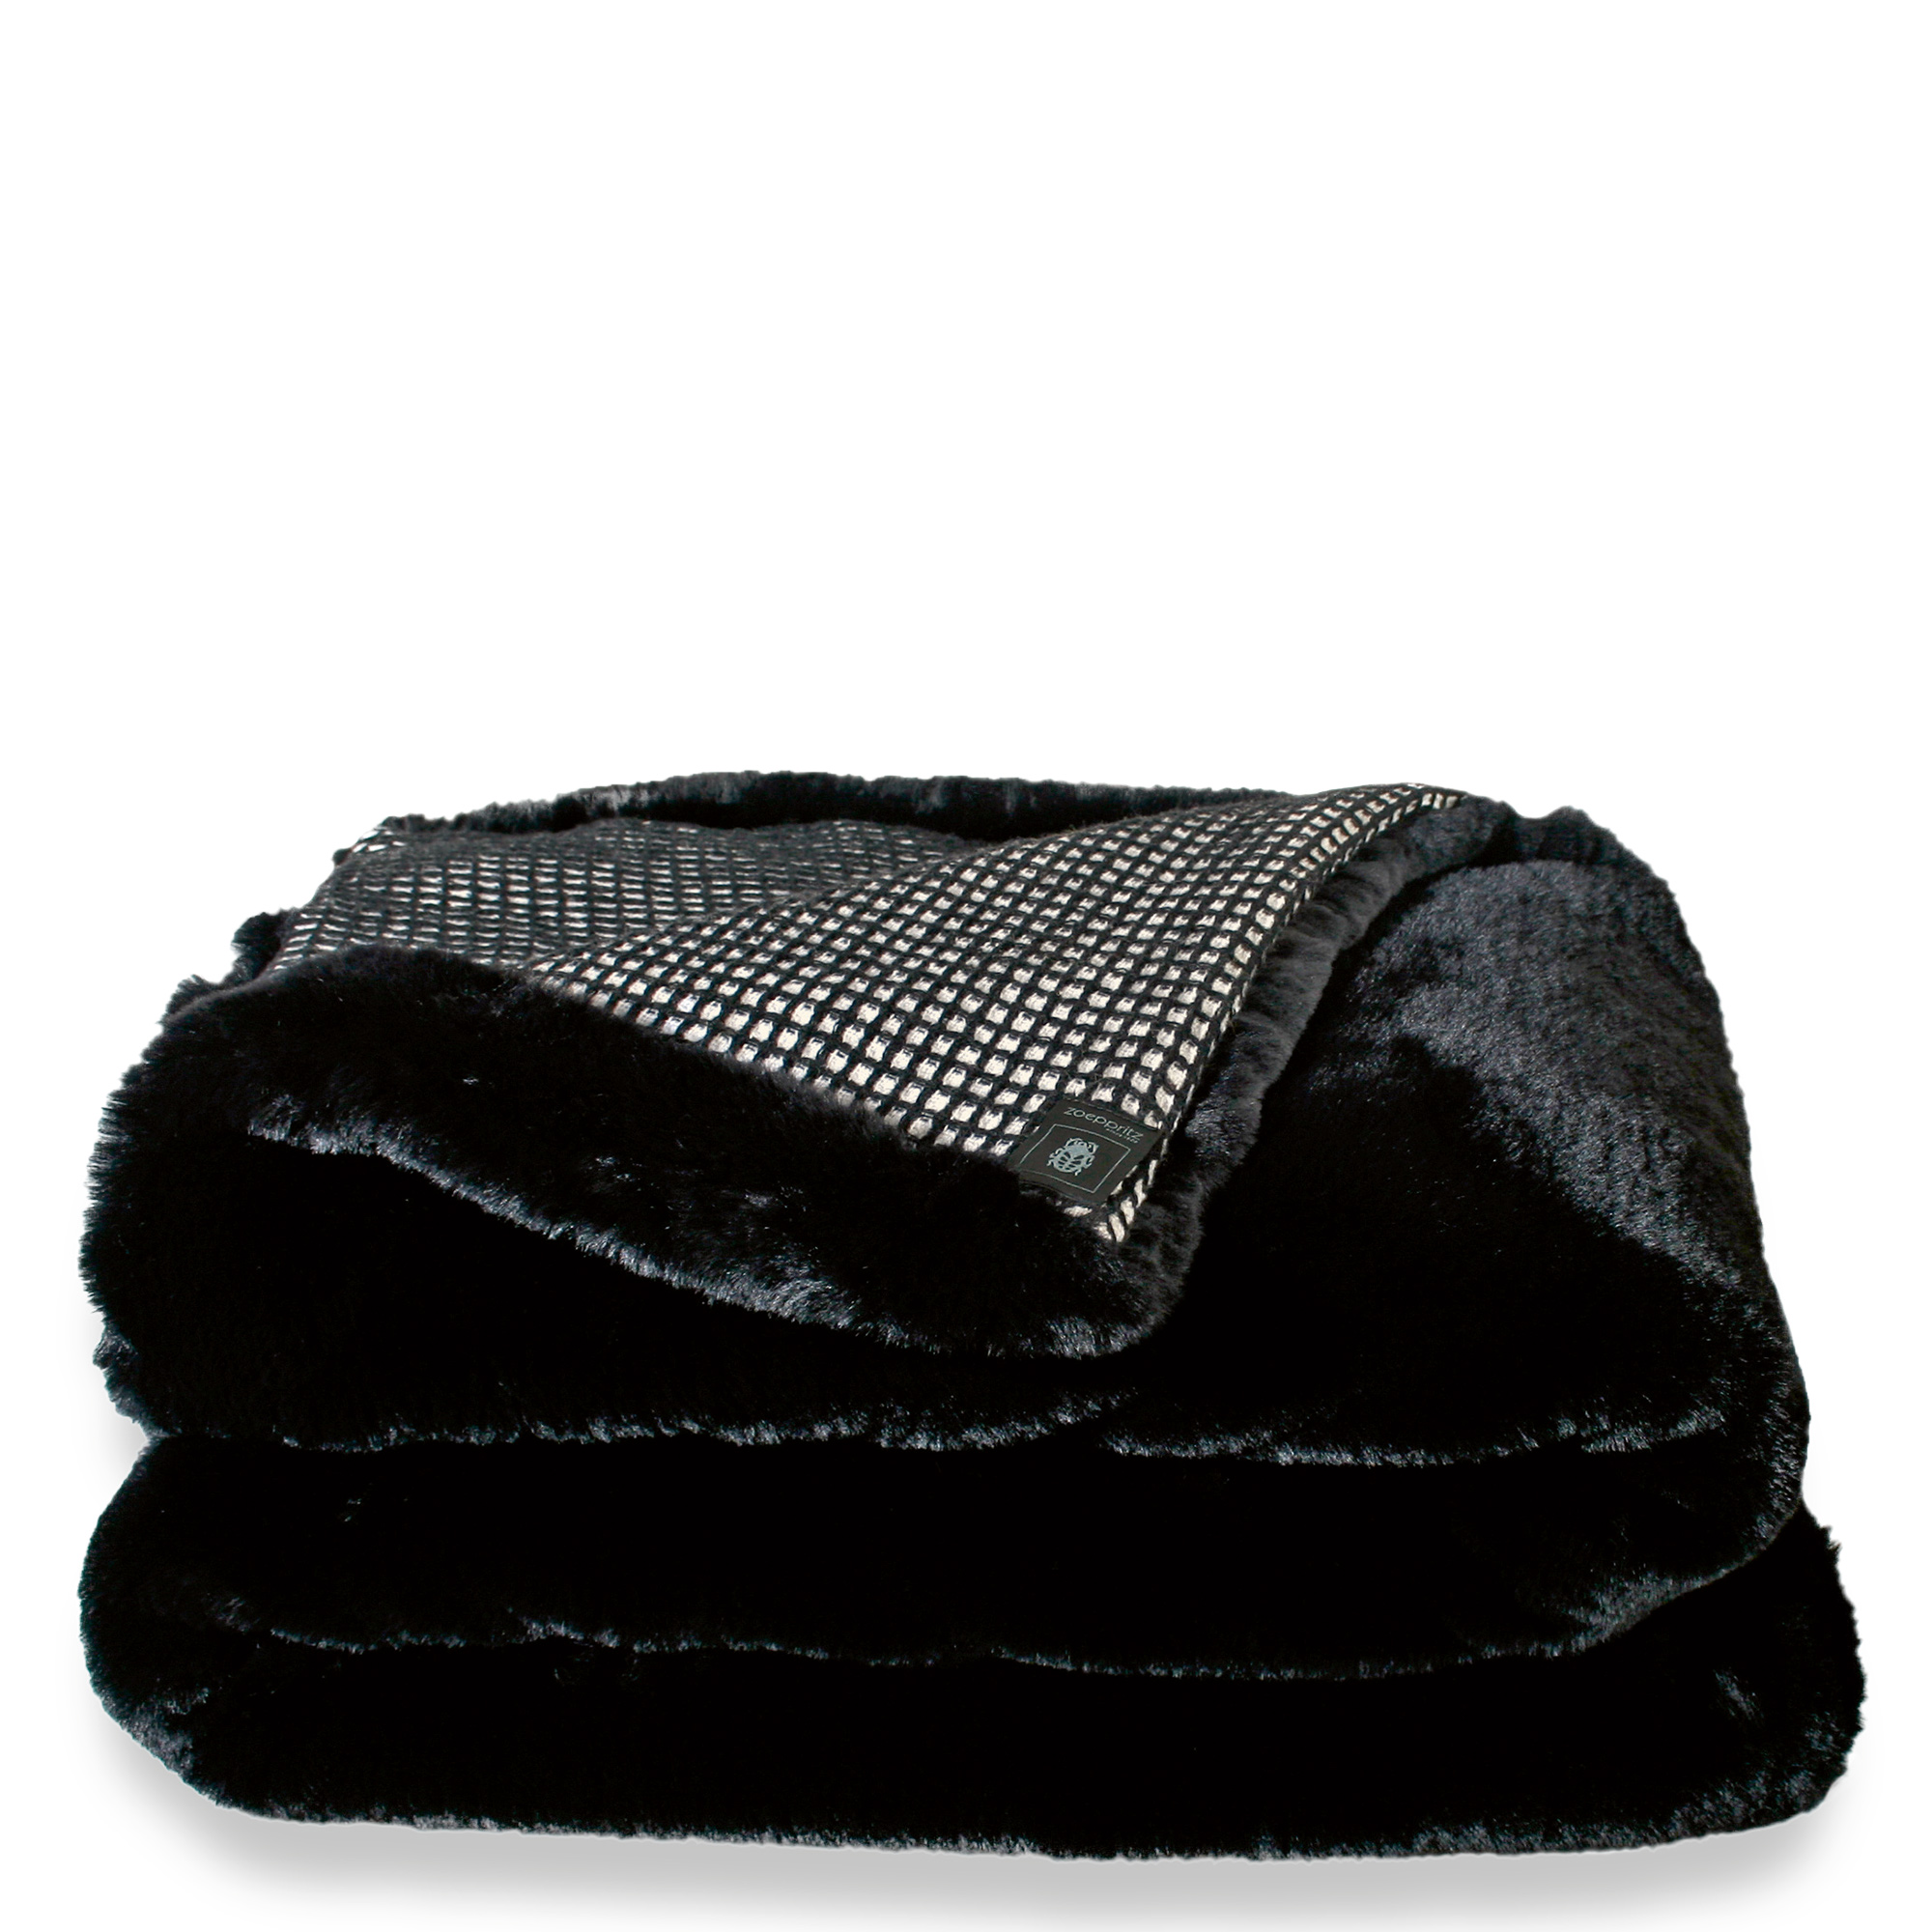 zoeppritz Grizzly Mesh Decke, Farbe schwarz, Material Kunstfell Schurwolle in Groesse 140x190